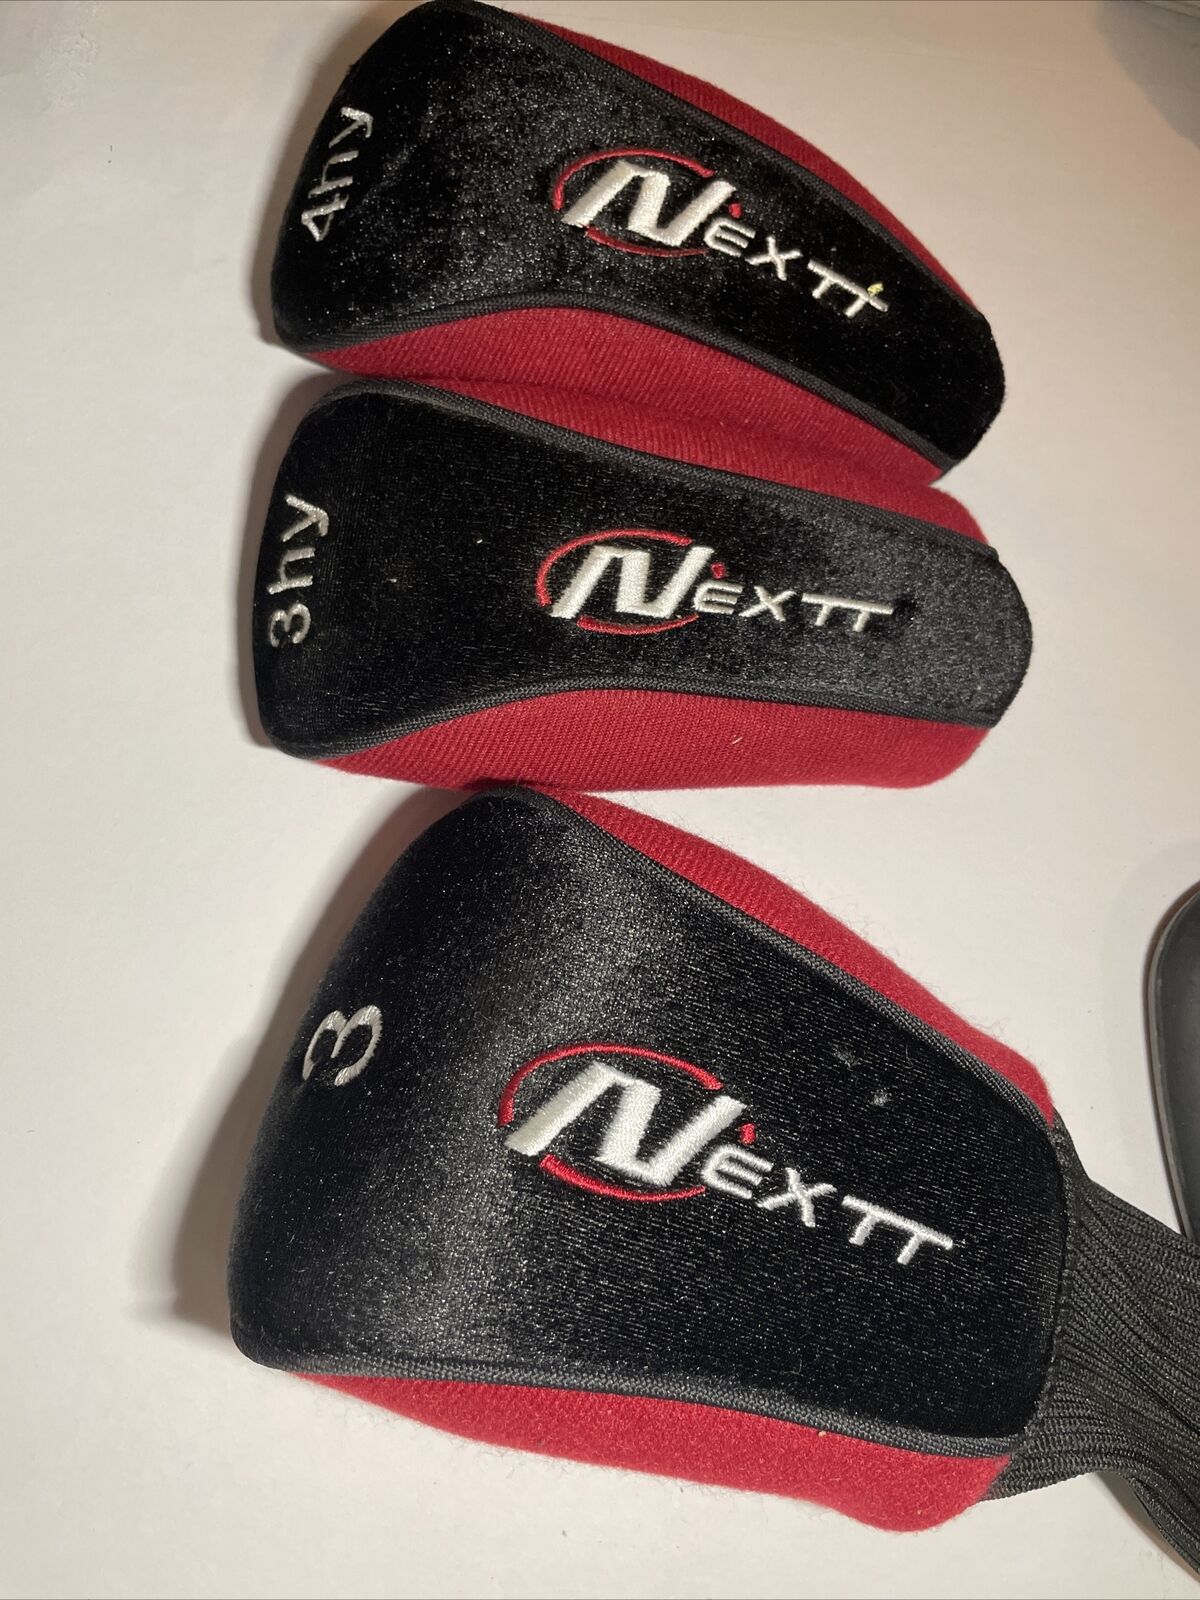 Nextt Golf club covers Nextt - фотография #4